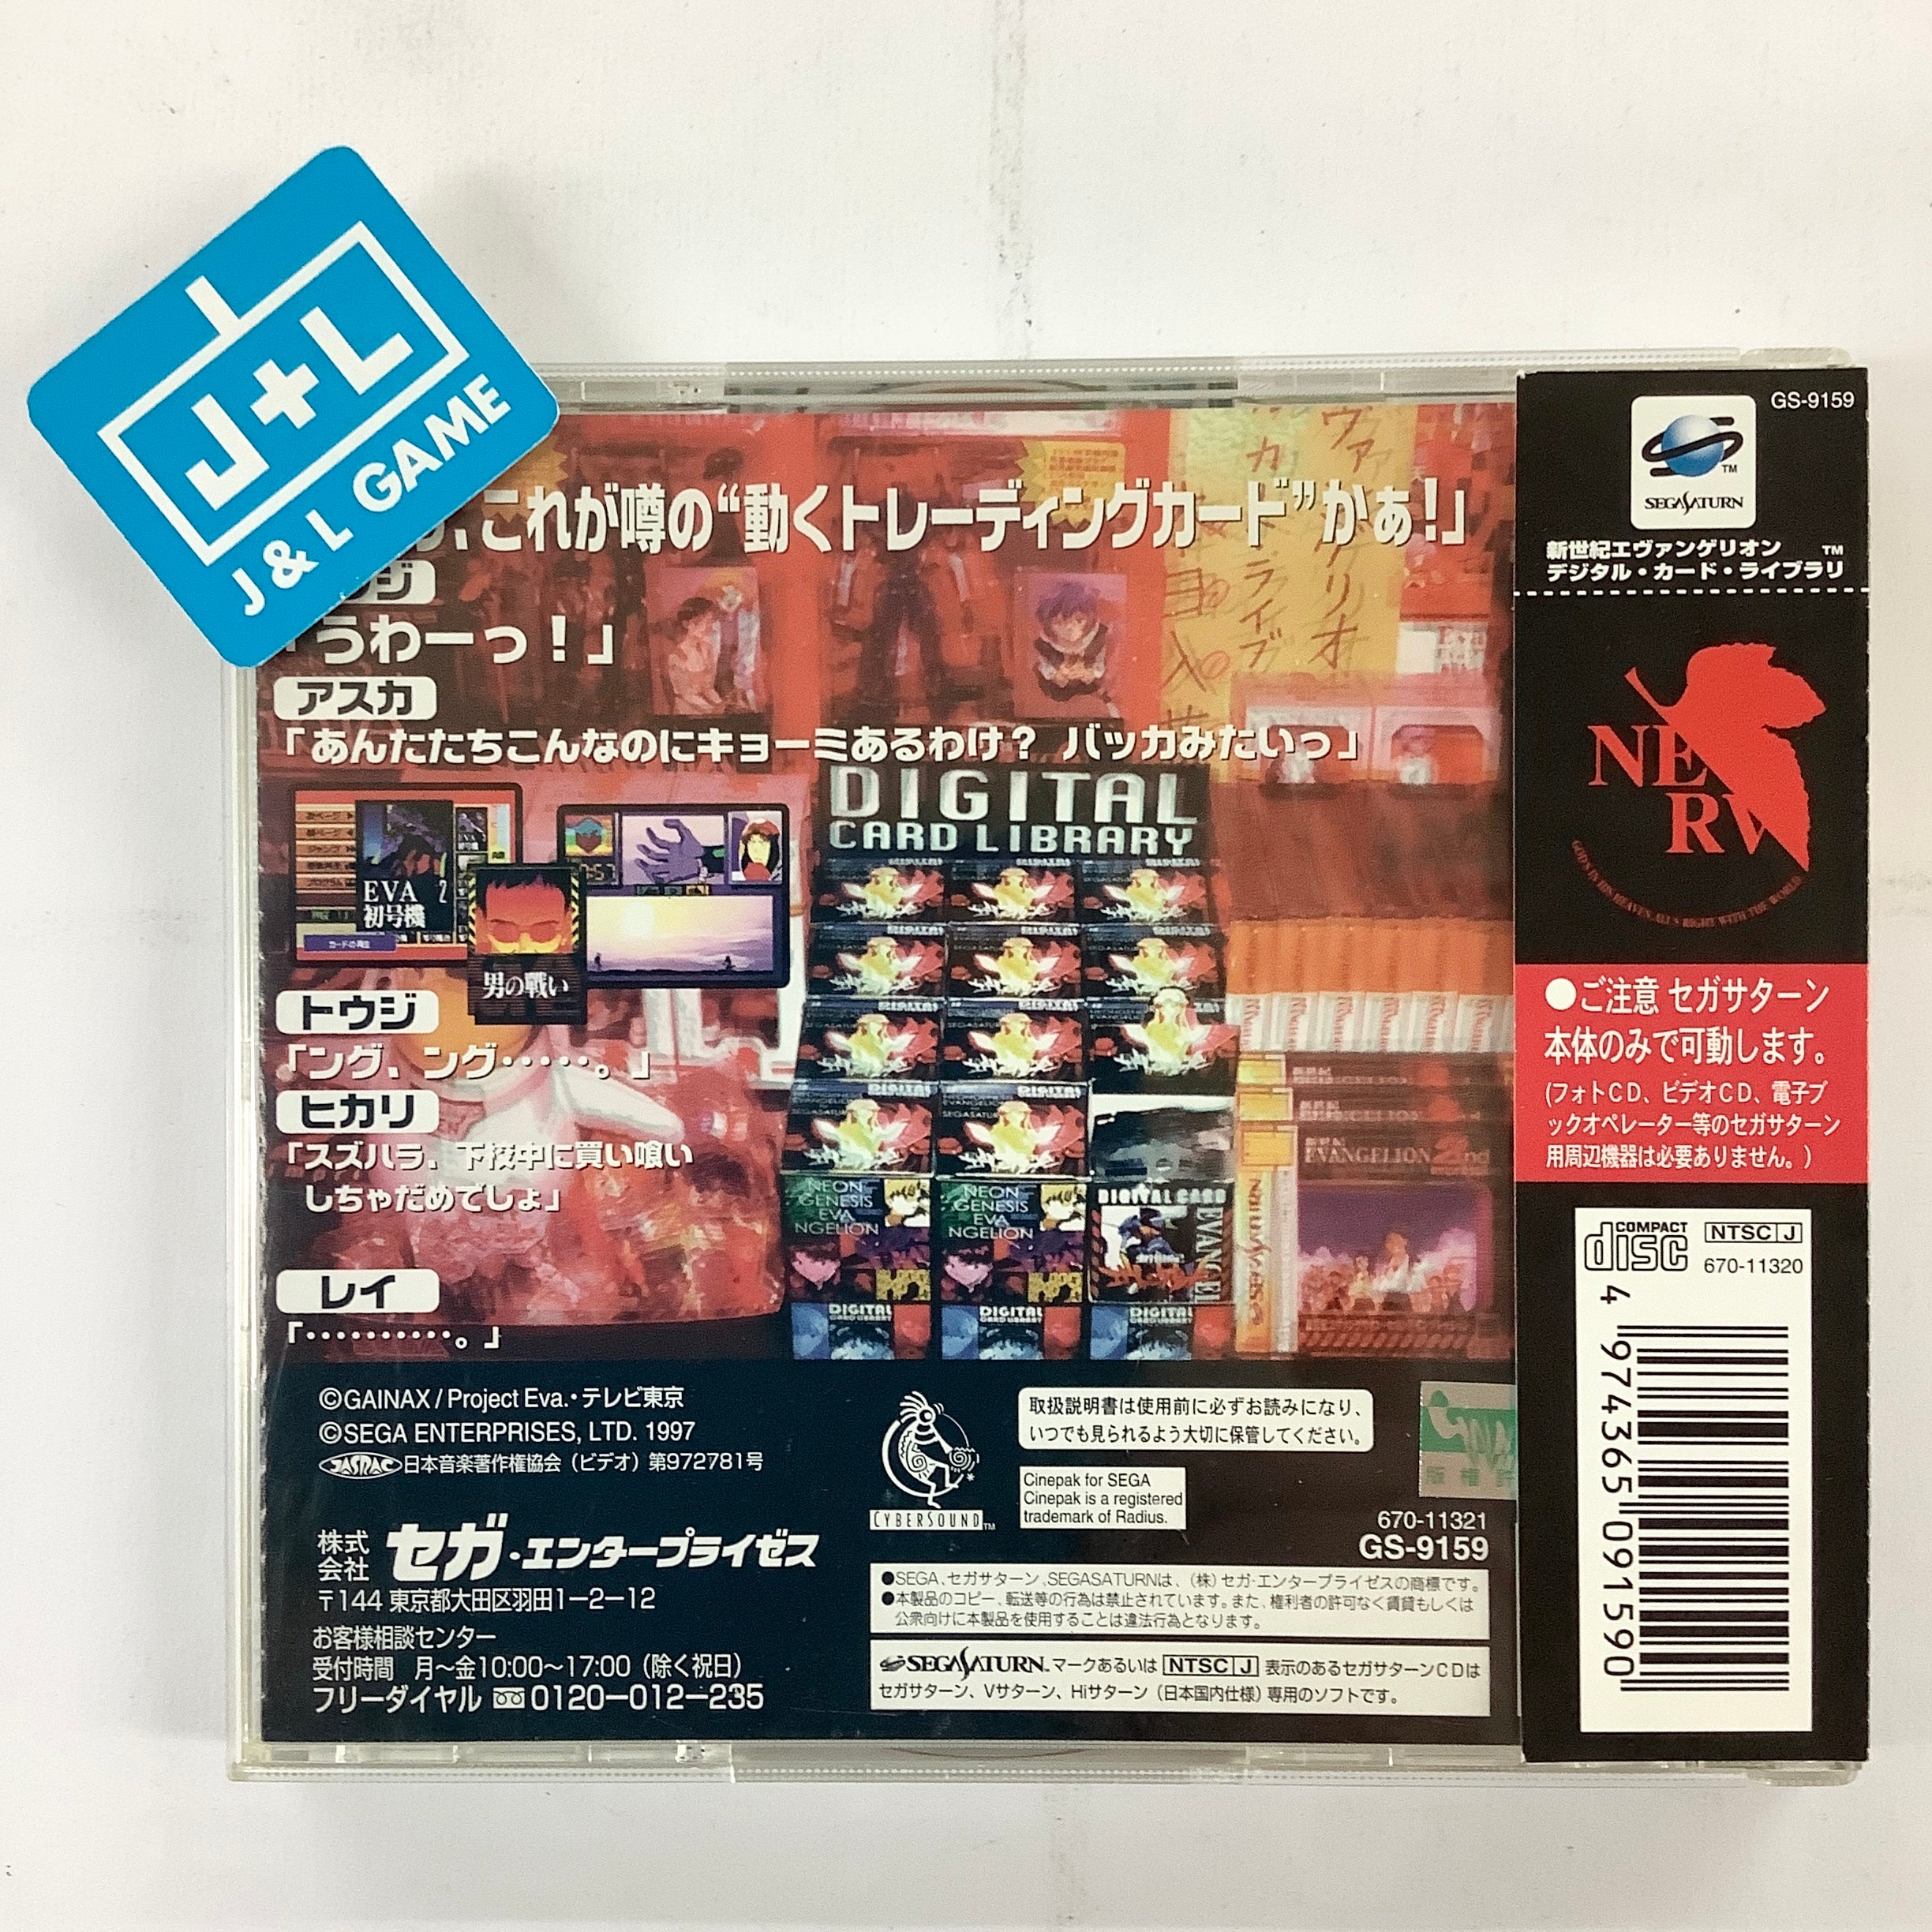 Shinseiki Evangelion: Digital Card Library - (SS) SEGA Saturn [Pre-Owned] (Japanese Import) Video Games Sega   